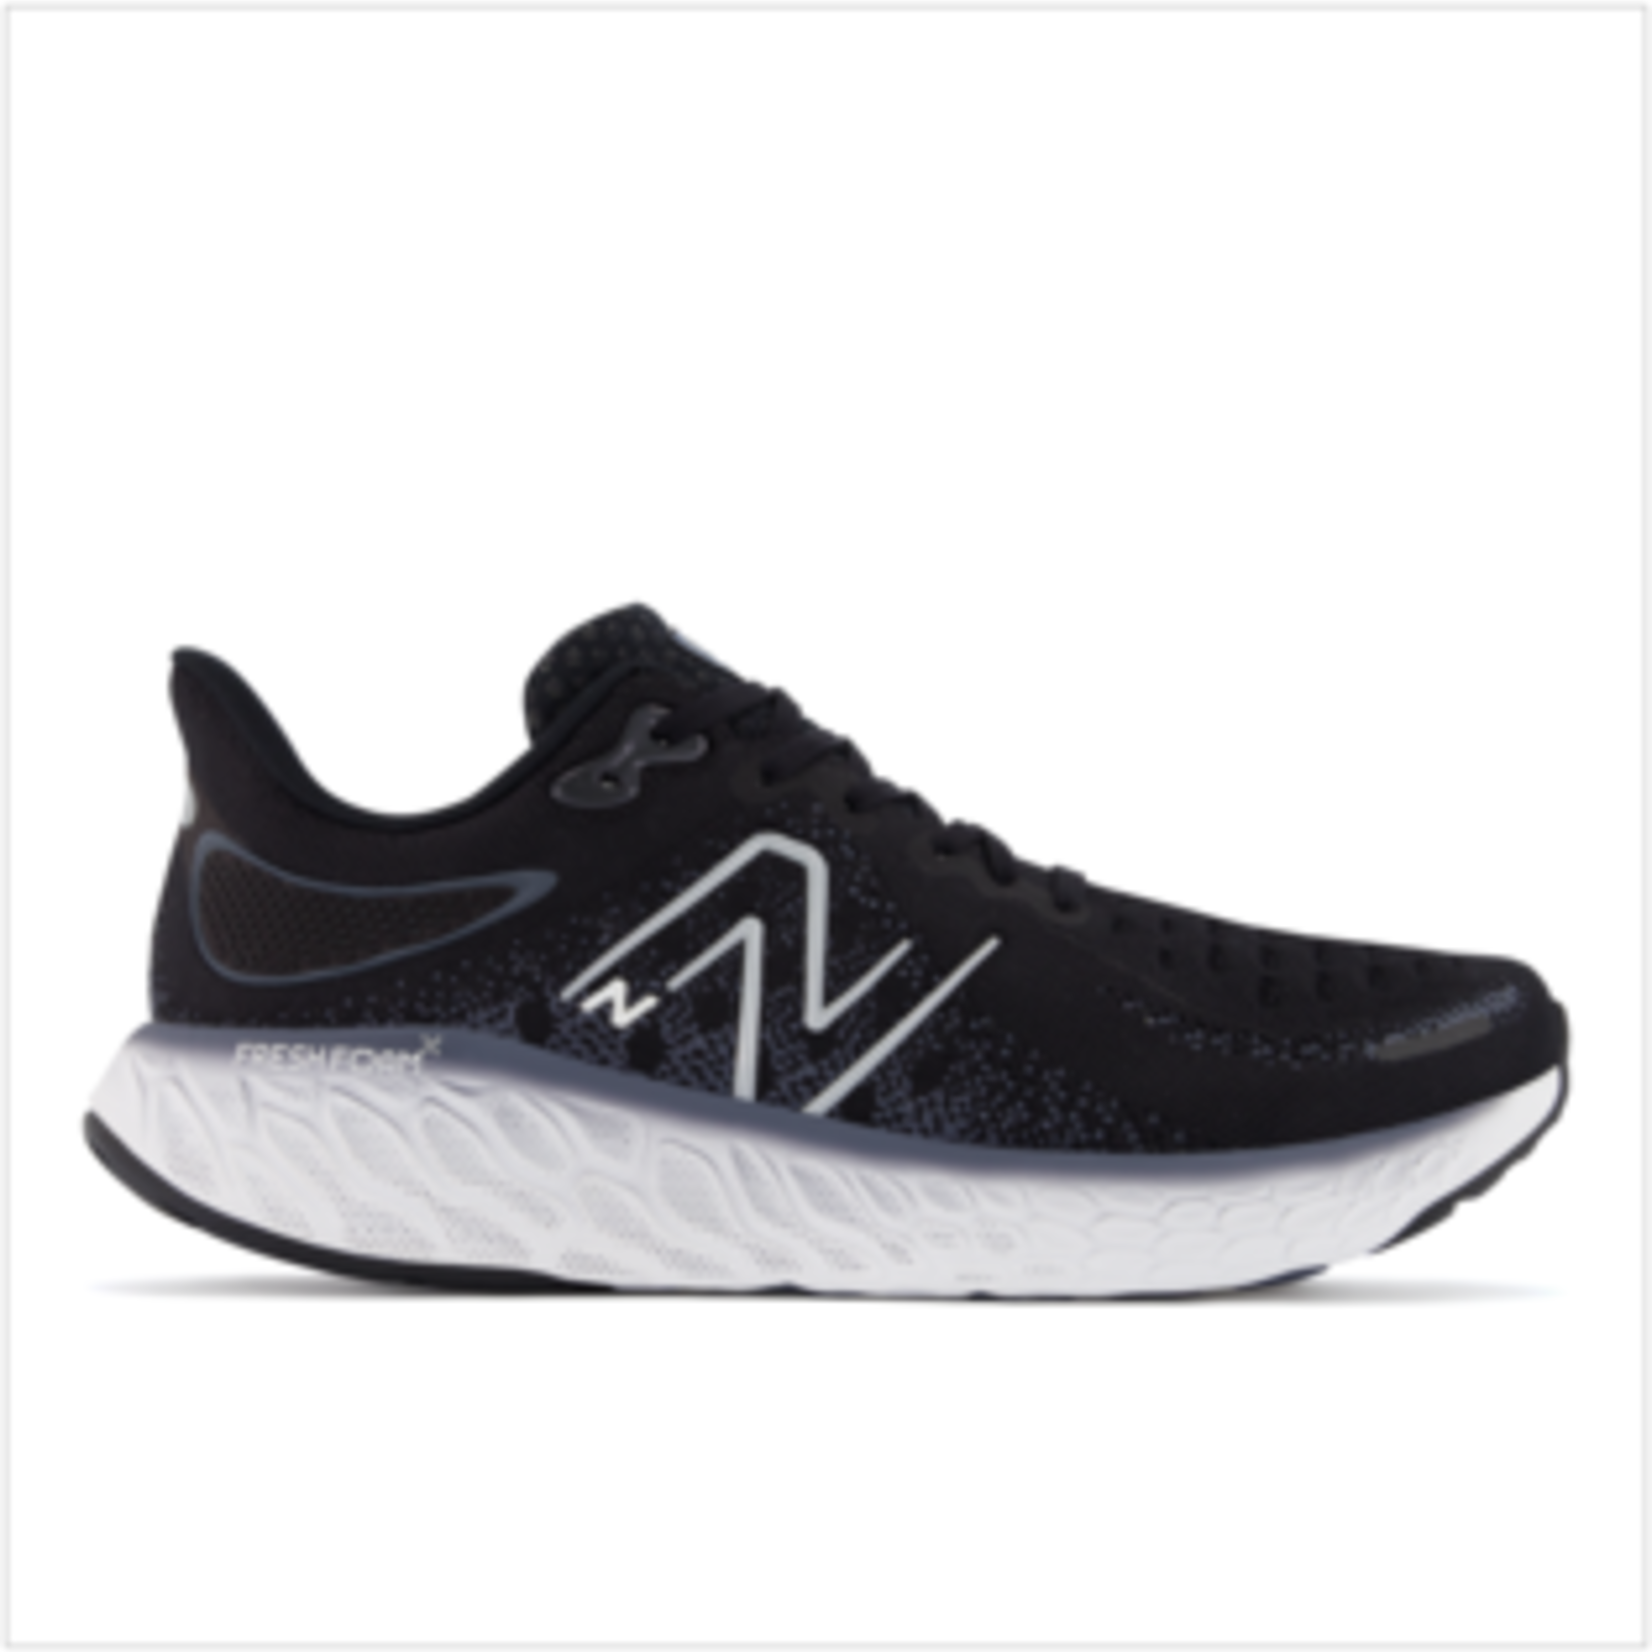 New Balance New Balance Running Shoes, 1080 v12, Mens